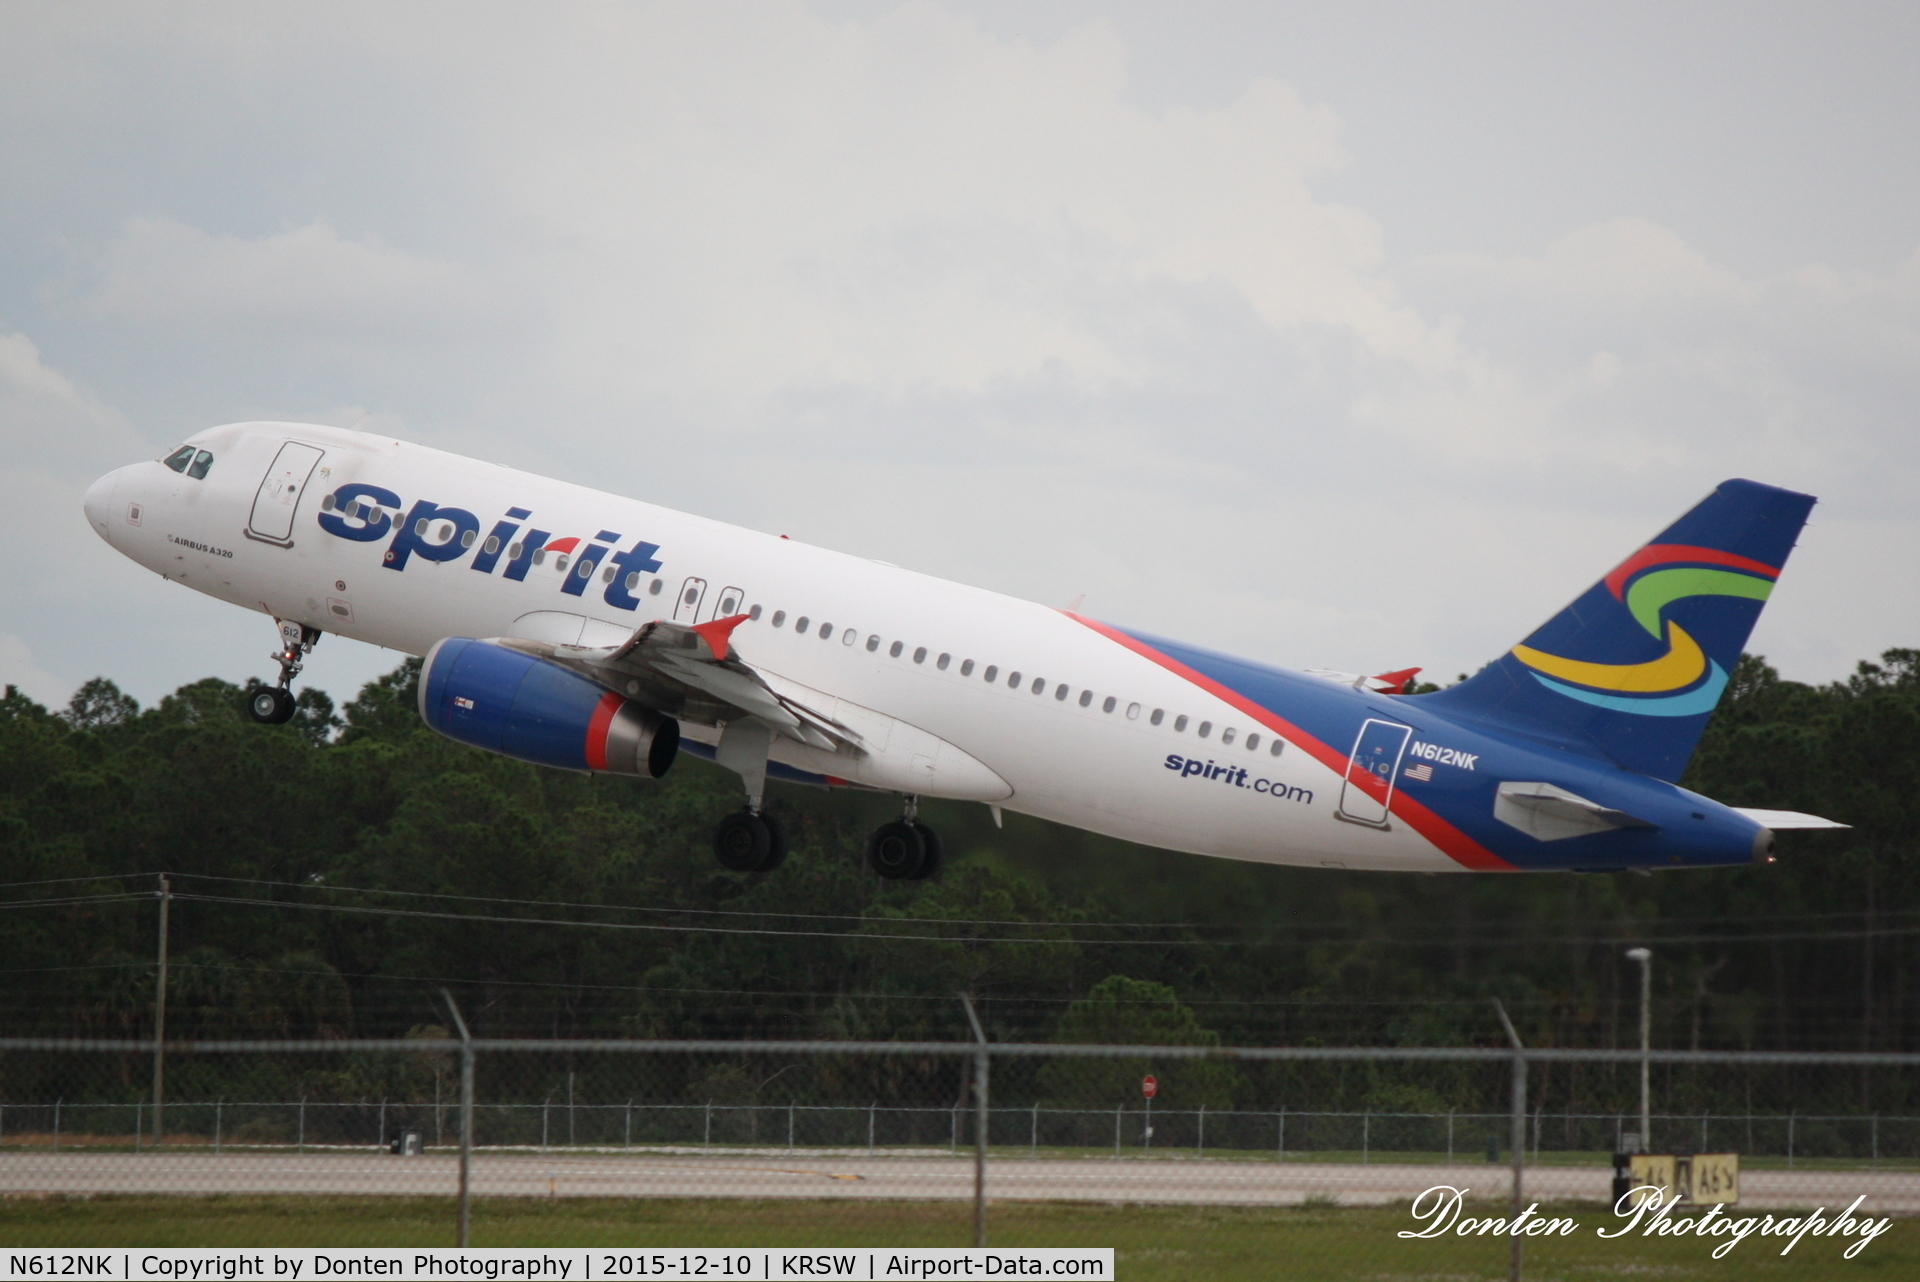 N612NK, 2012 Airbus A320-232 C/N 5029, Spirit Flight 220 (N612NK) departs Southwest Florida International Airport enroute to Chicago-O'Hare International Airport